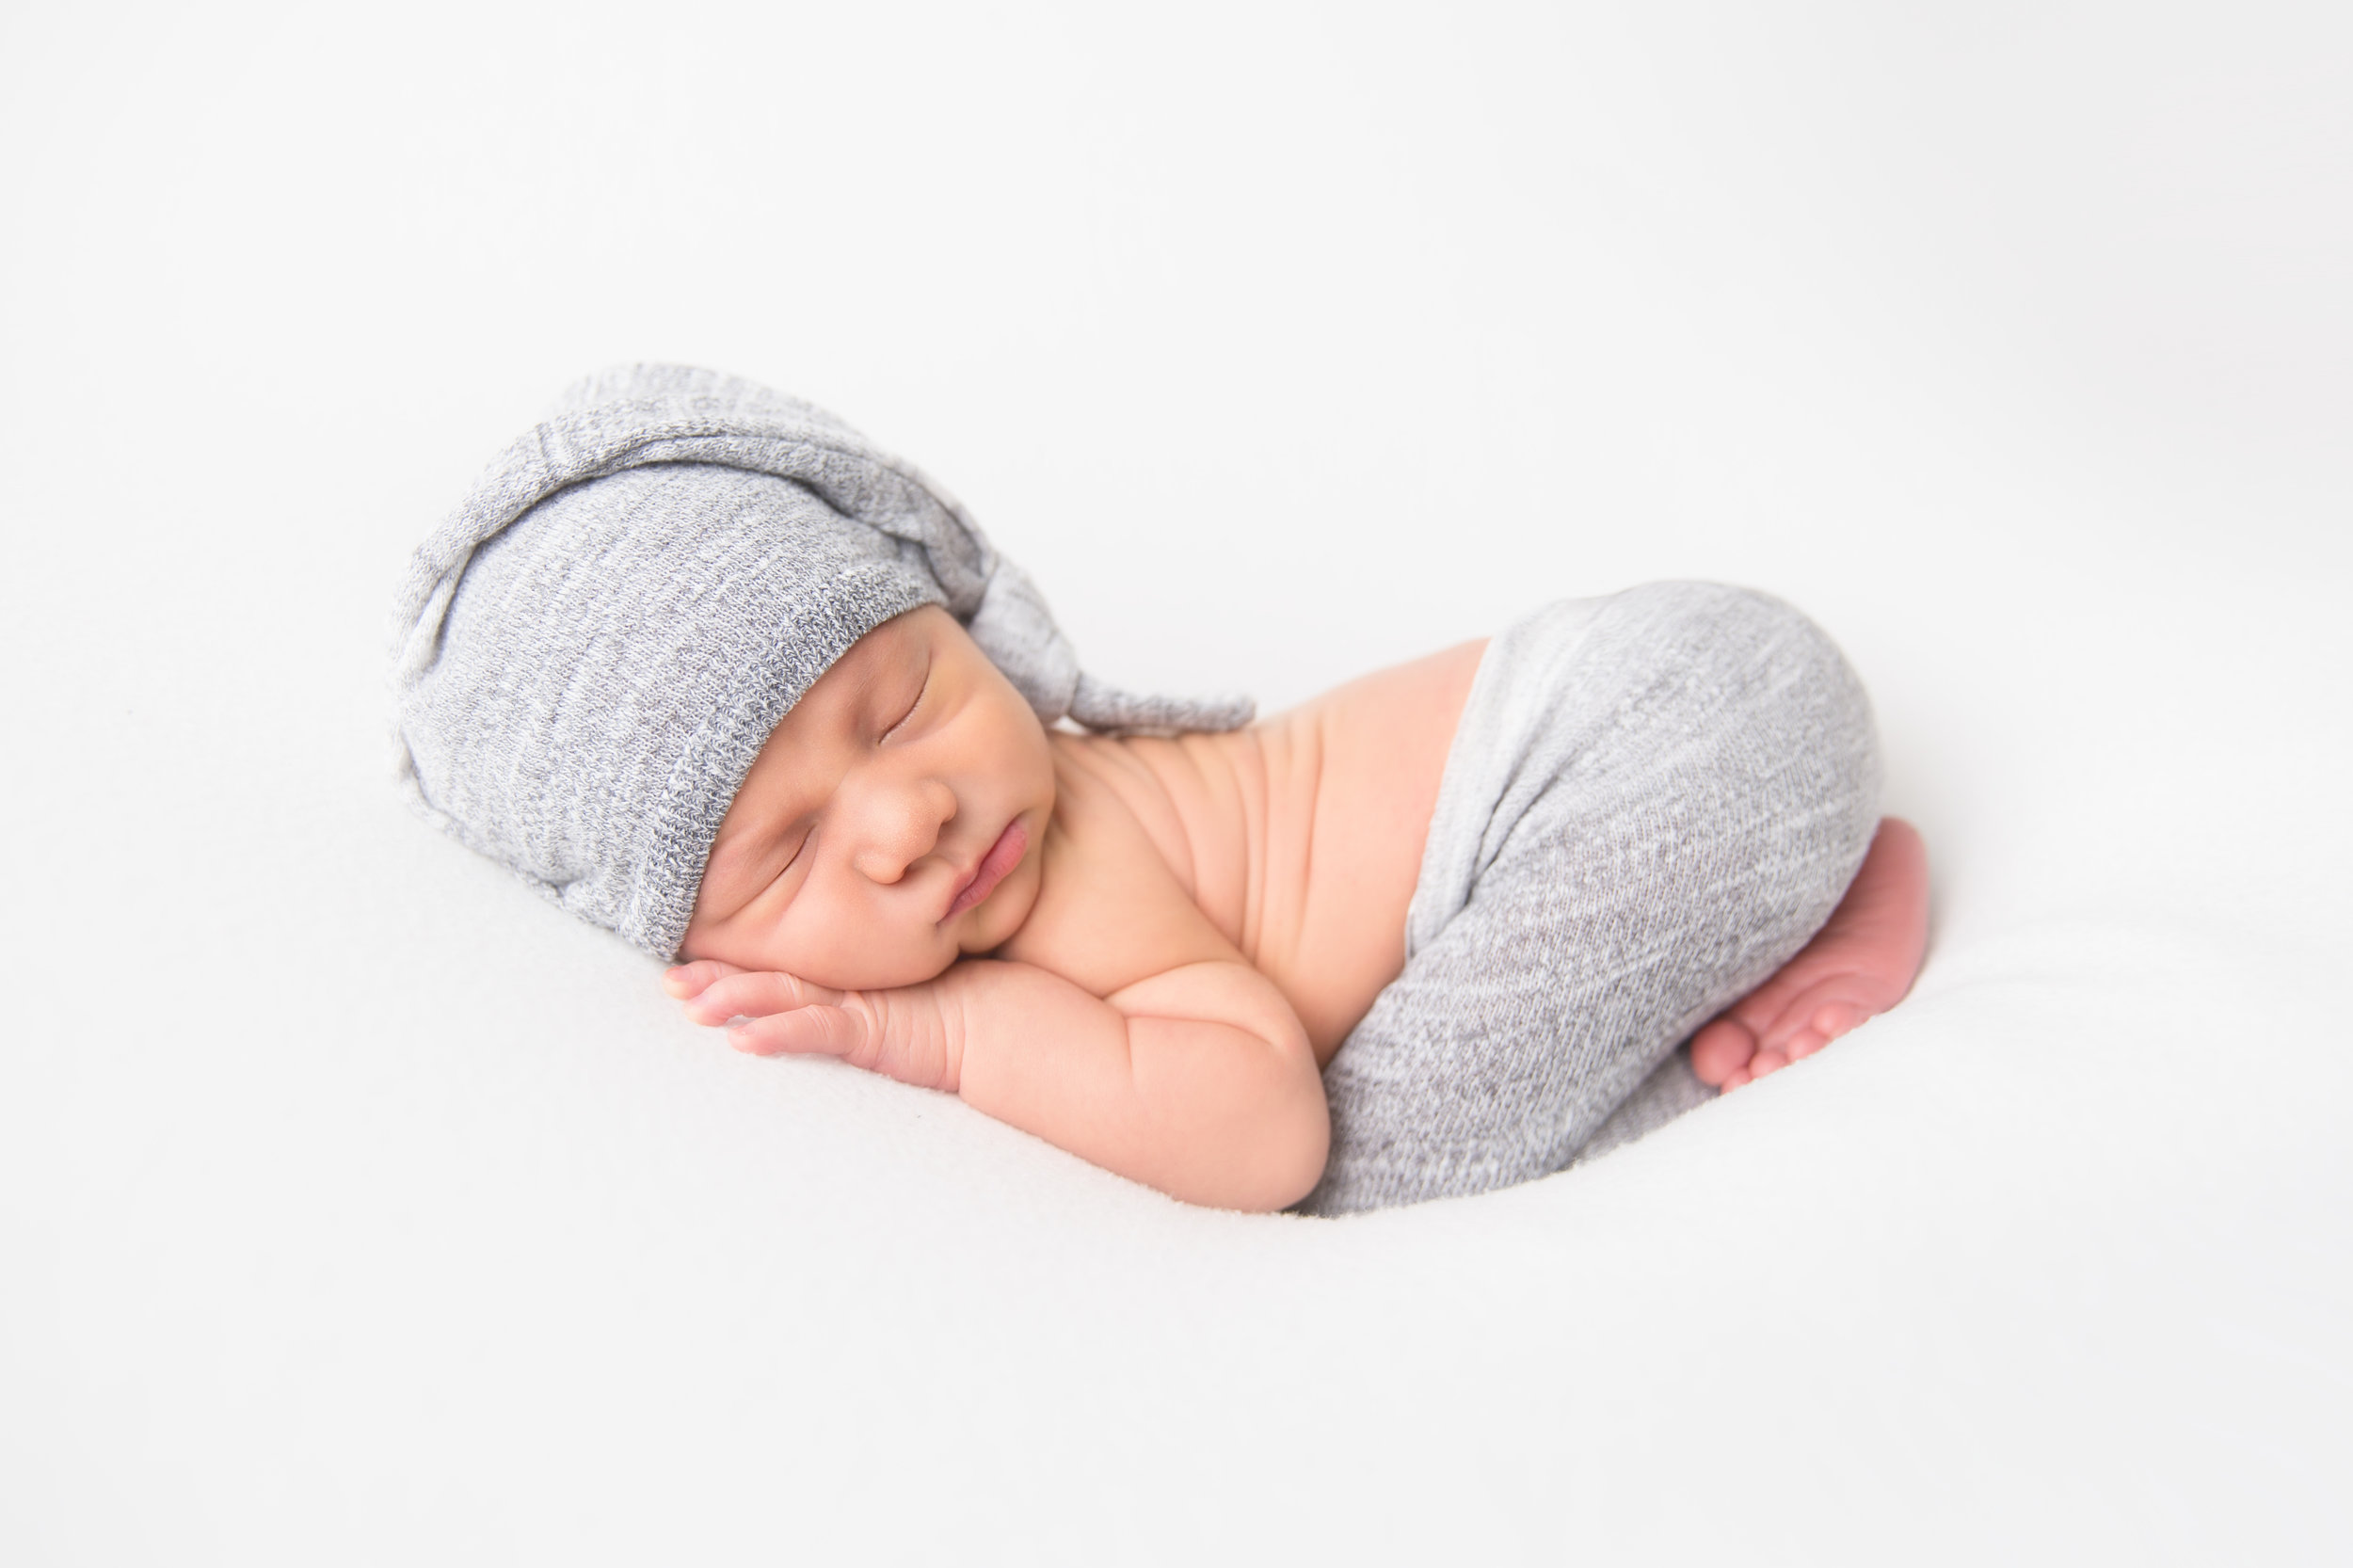 nyc-newborn-photographer-baby-boy